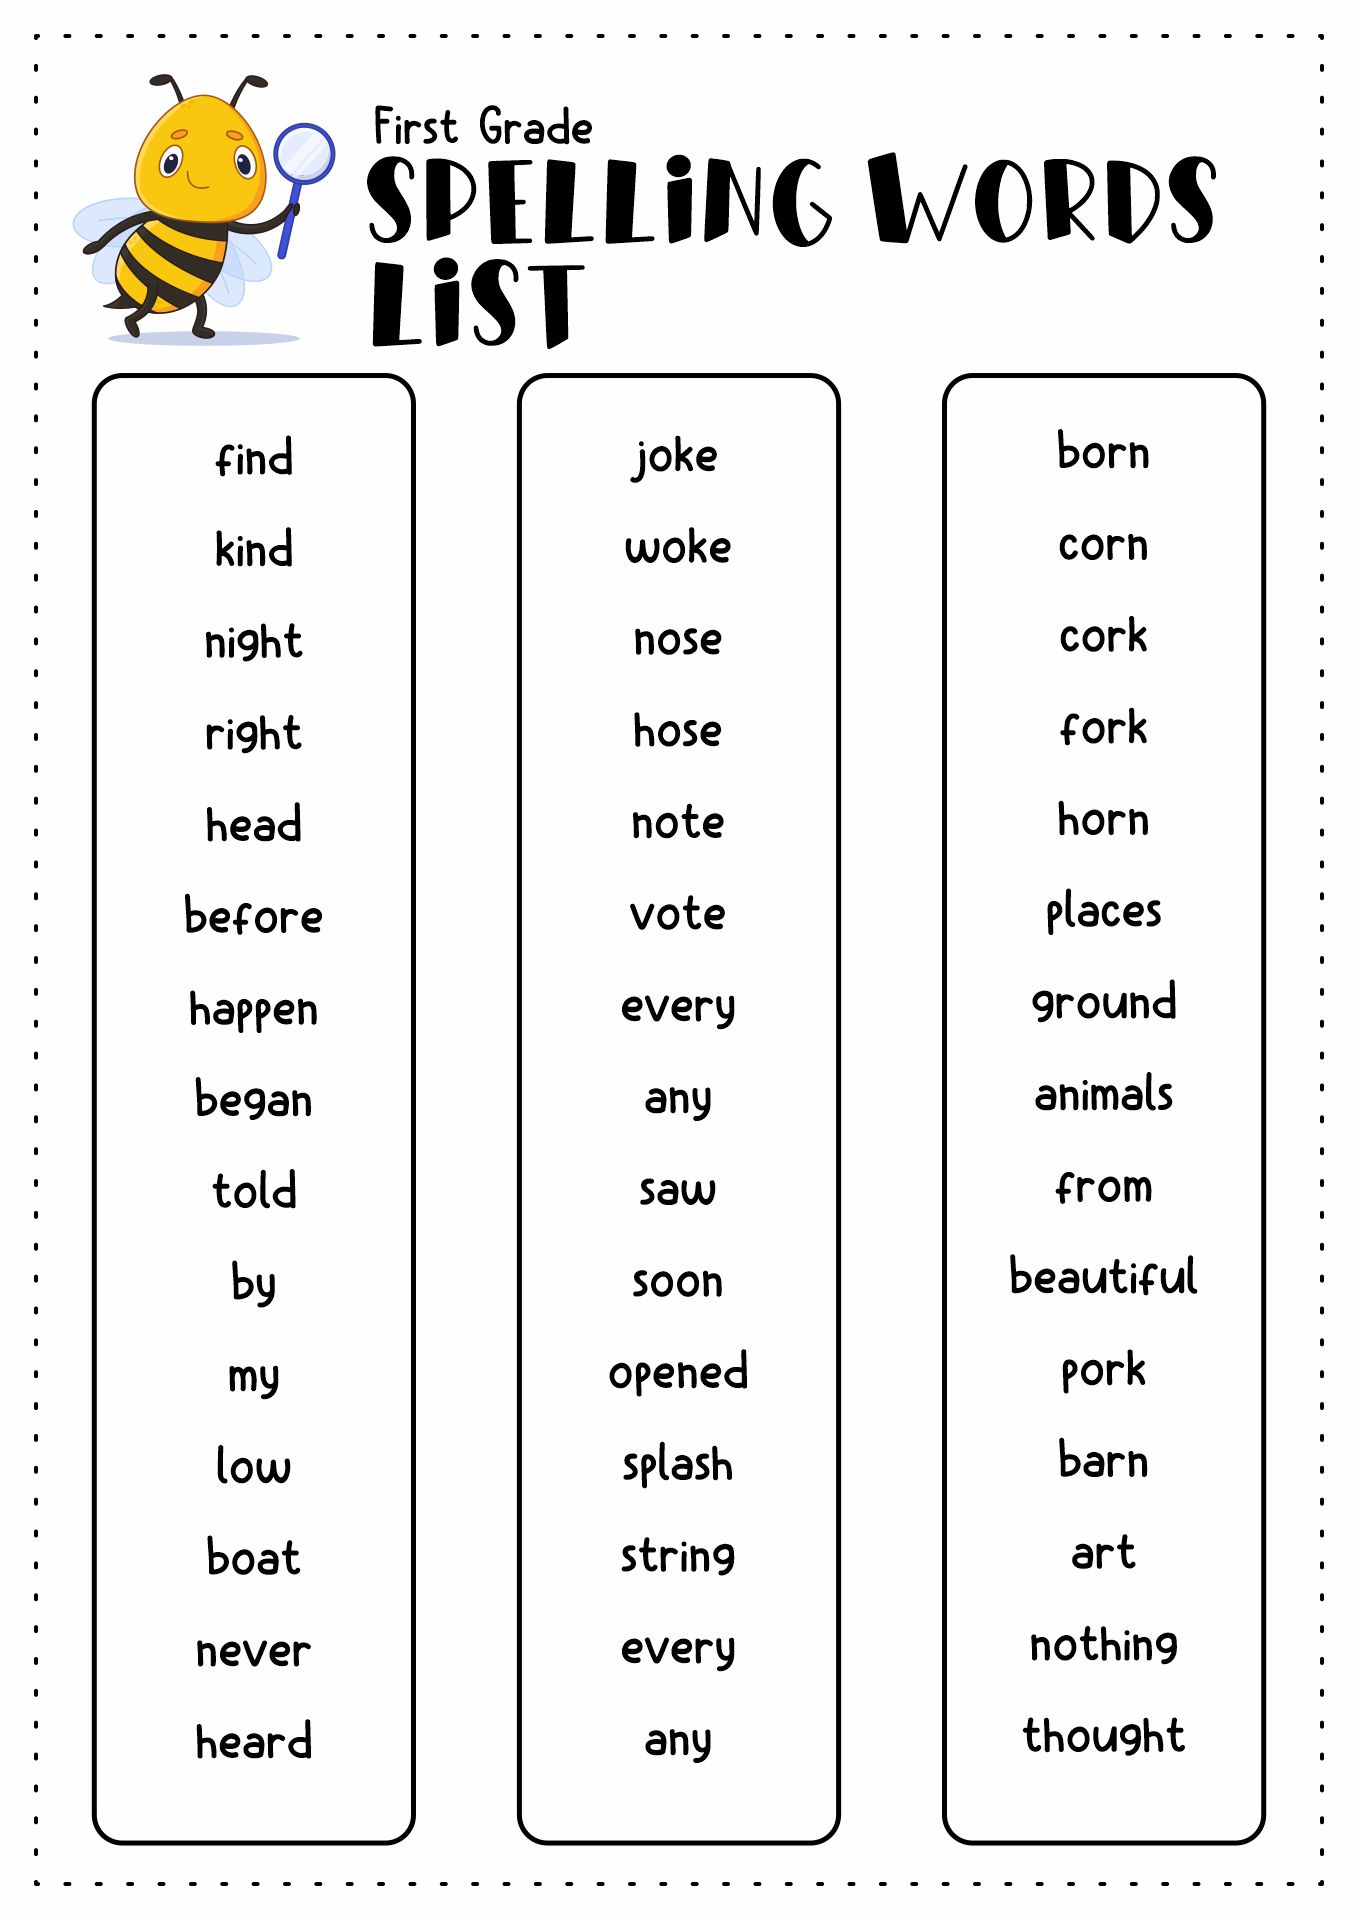 1st Grade Spelling Word List Image